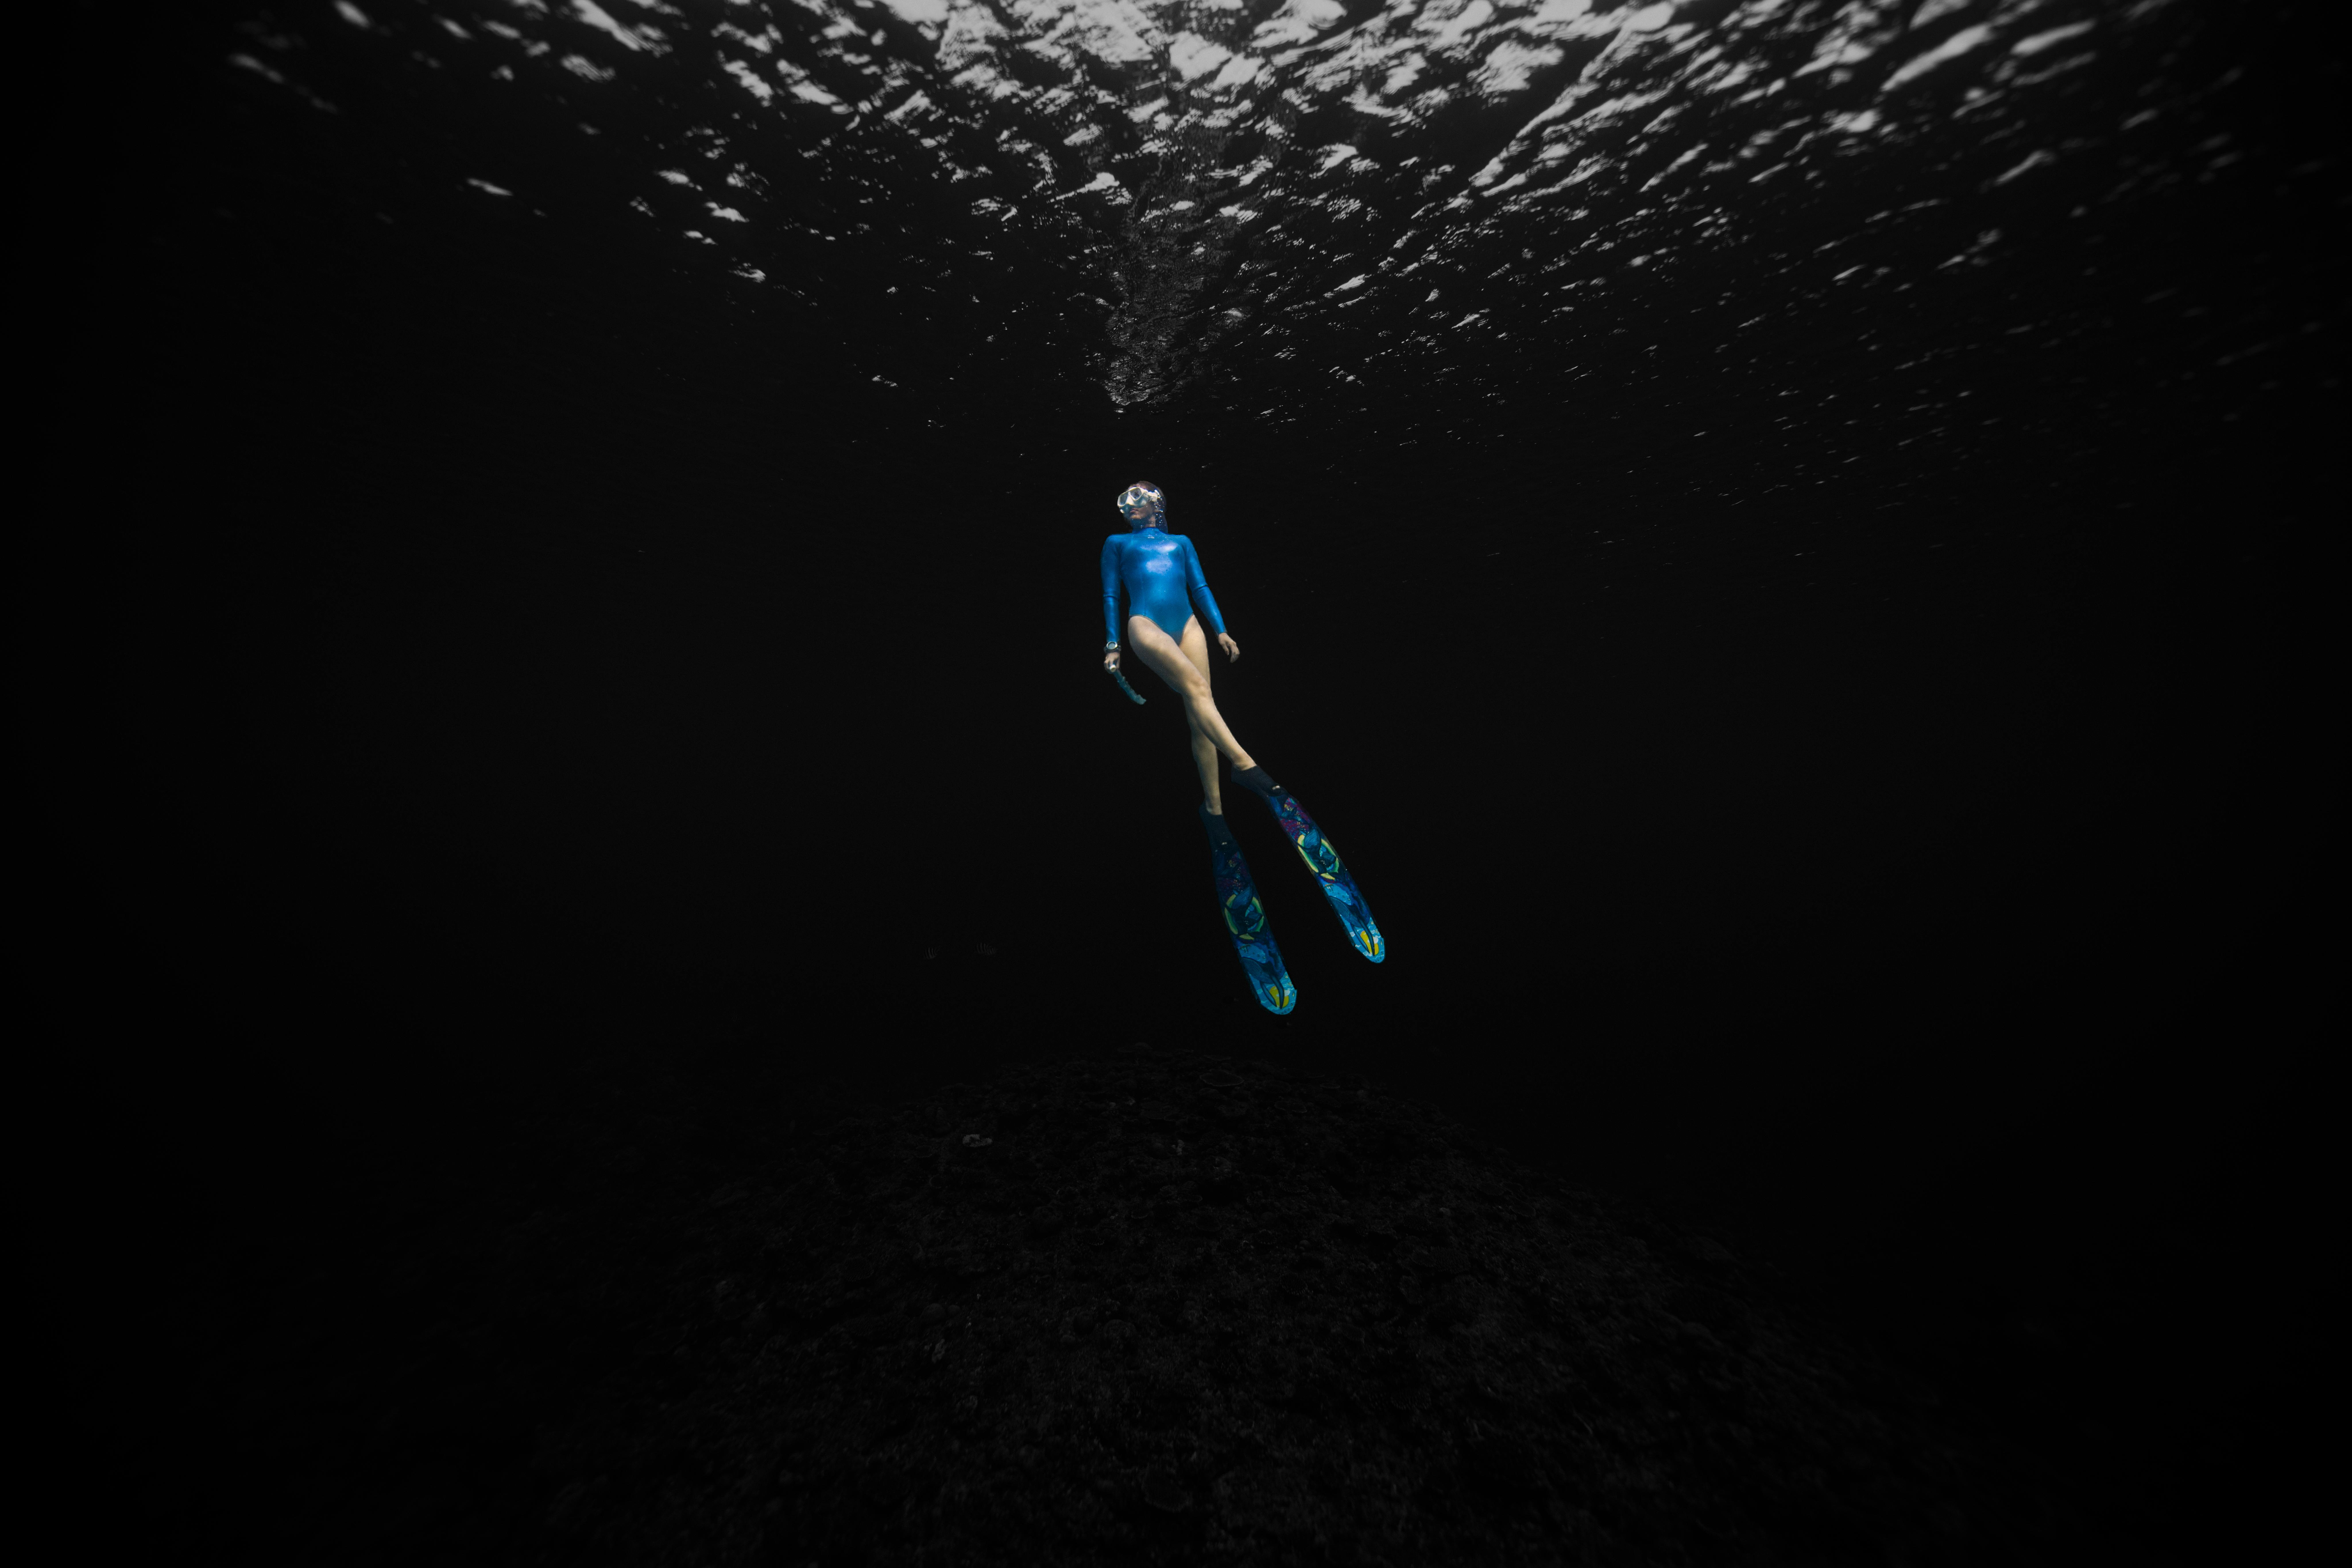 female free diver immersed in dark waters